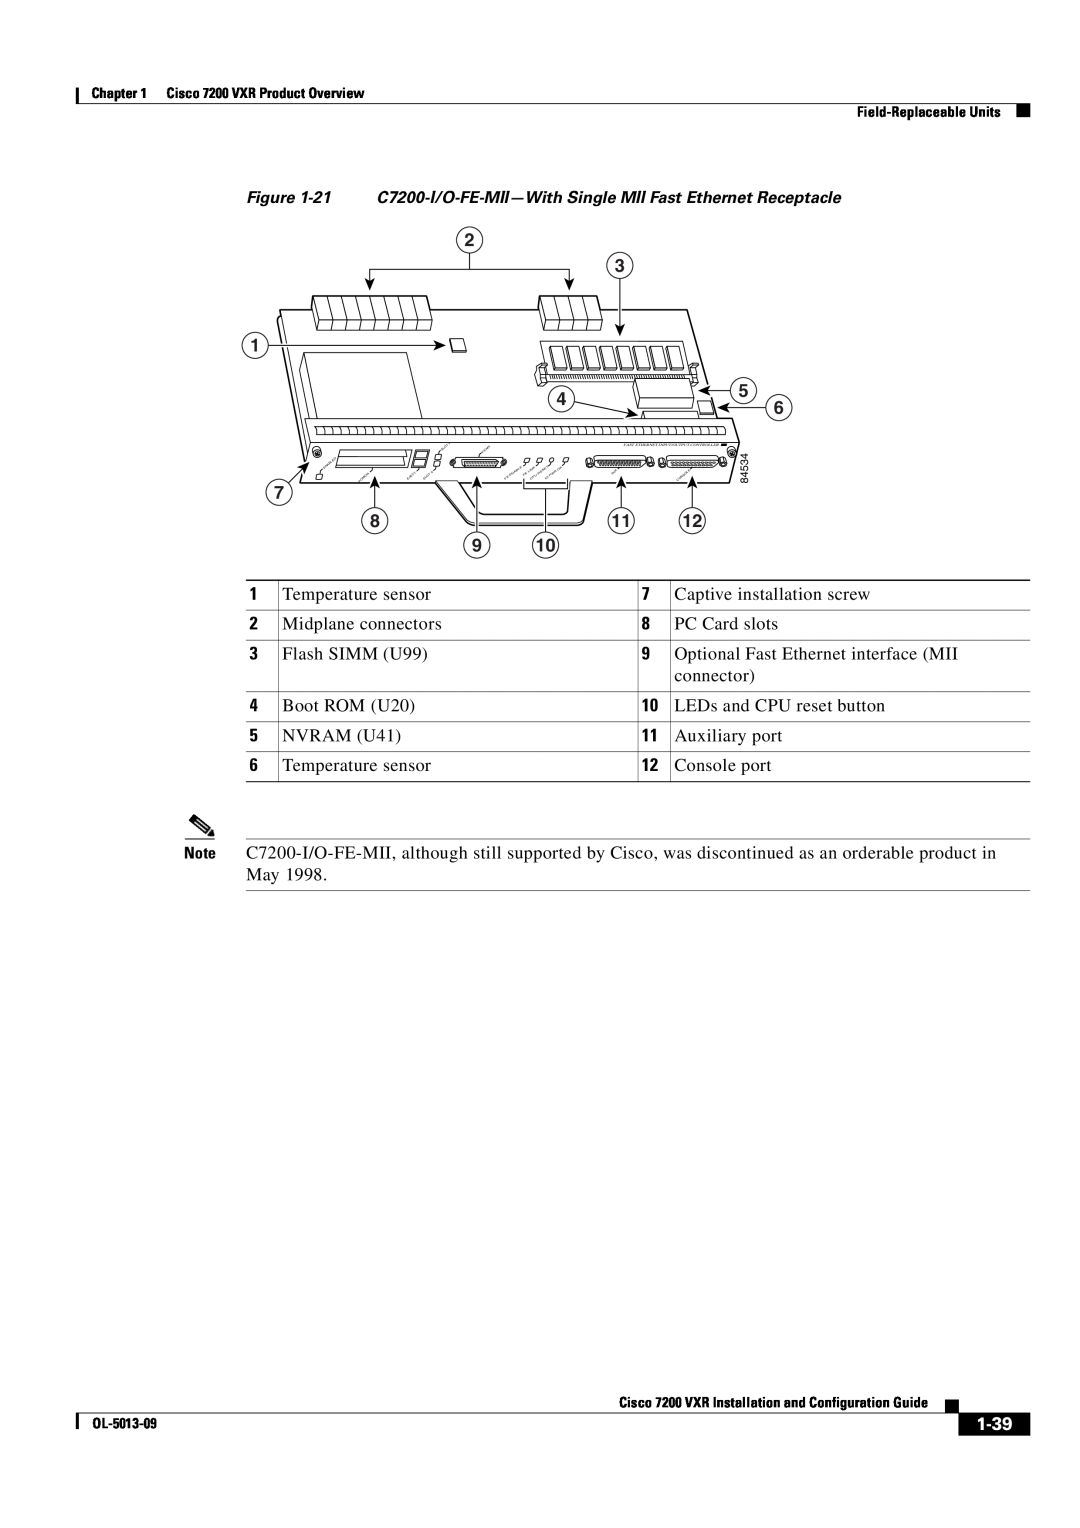 Cisco Systems 7200 VXR manual 1-39, 21 C7200-I/O-FE-MII-With Single MII Fast Ethernet Receptacle 